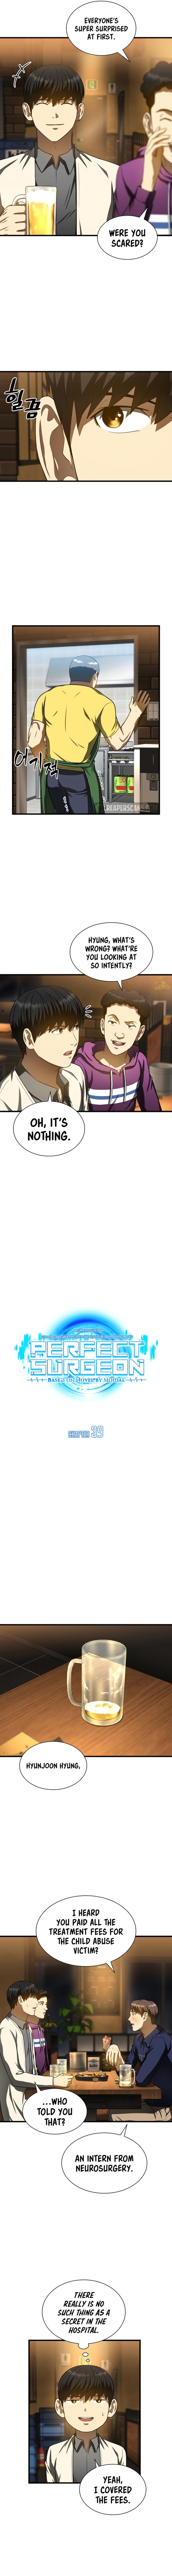 Perfect Surgeon 39 5